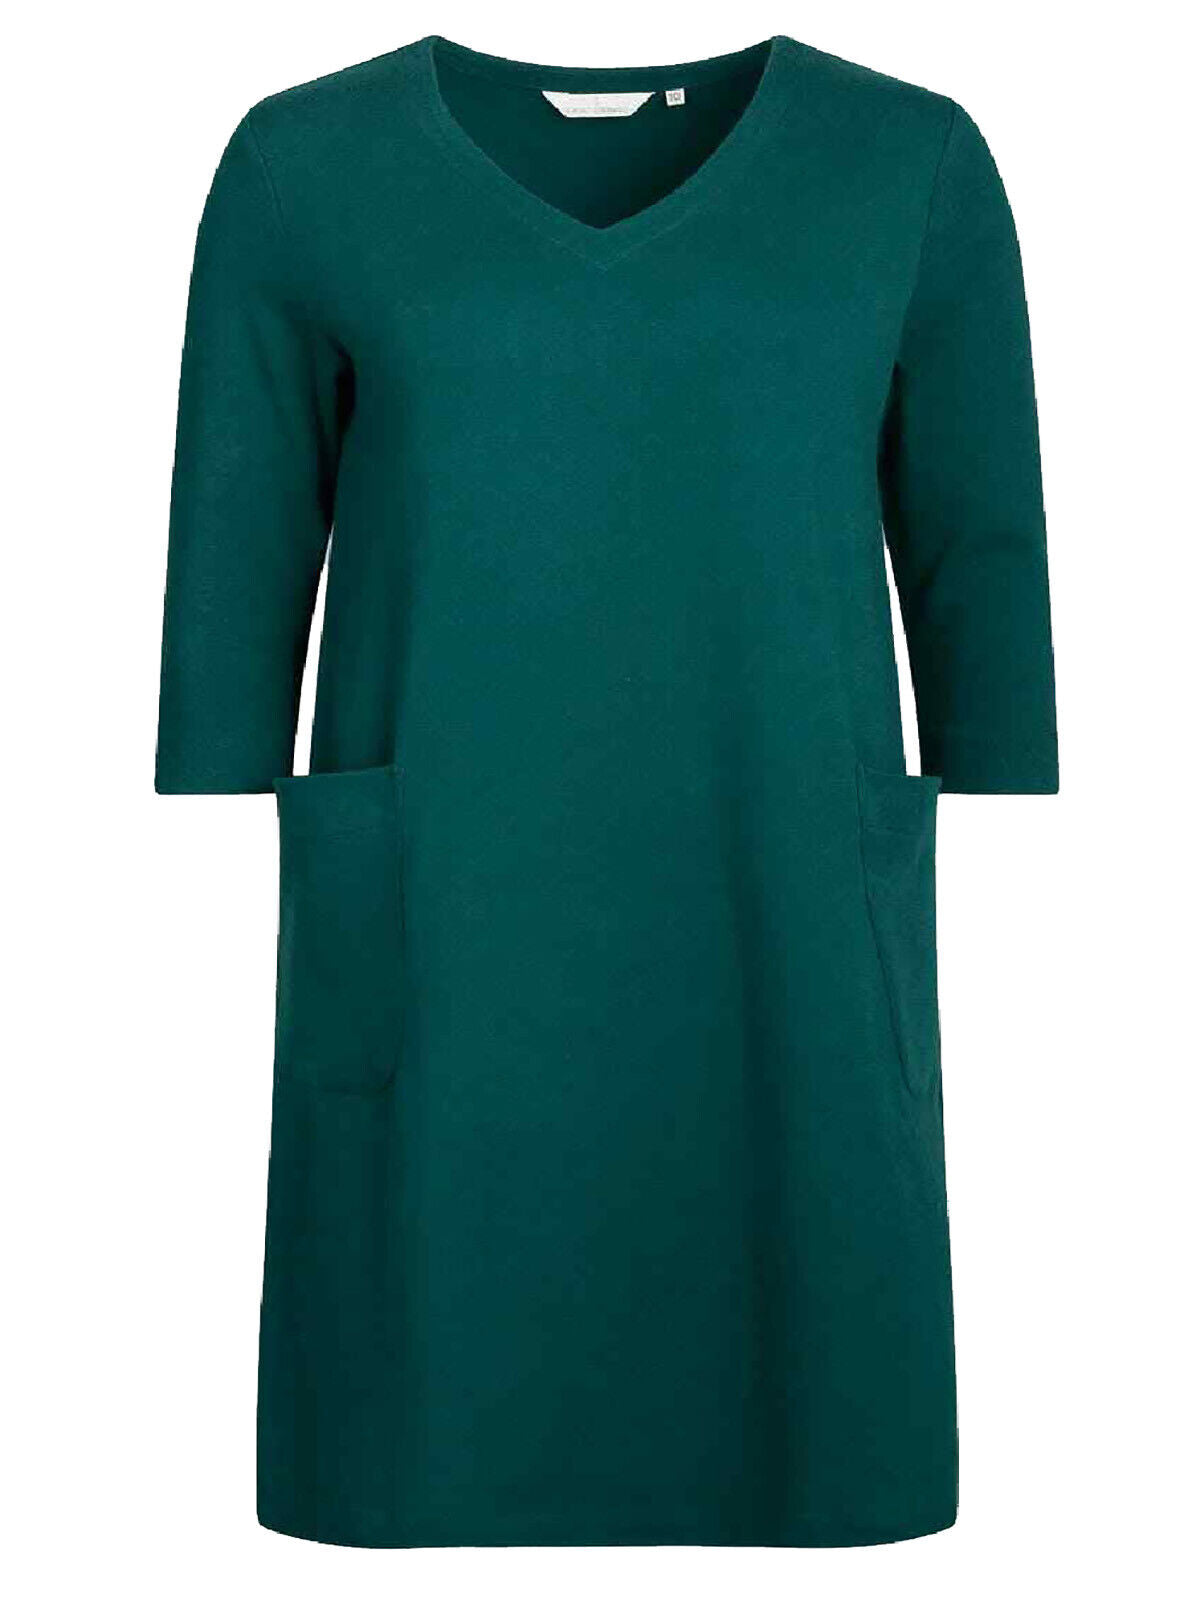 EX SEASALT Emerald Wood Block Dress in Sizes 10, 18, 20, 24 RRP £59.95 SECONDS